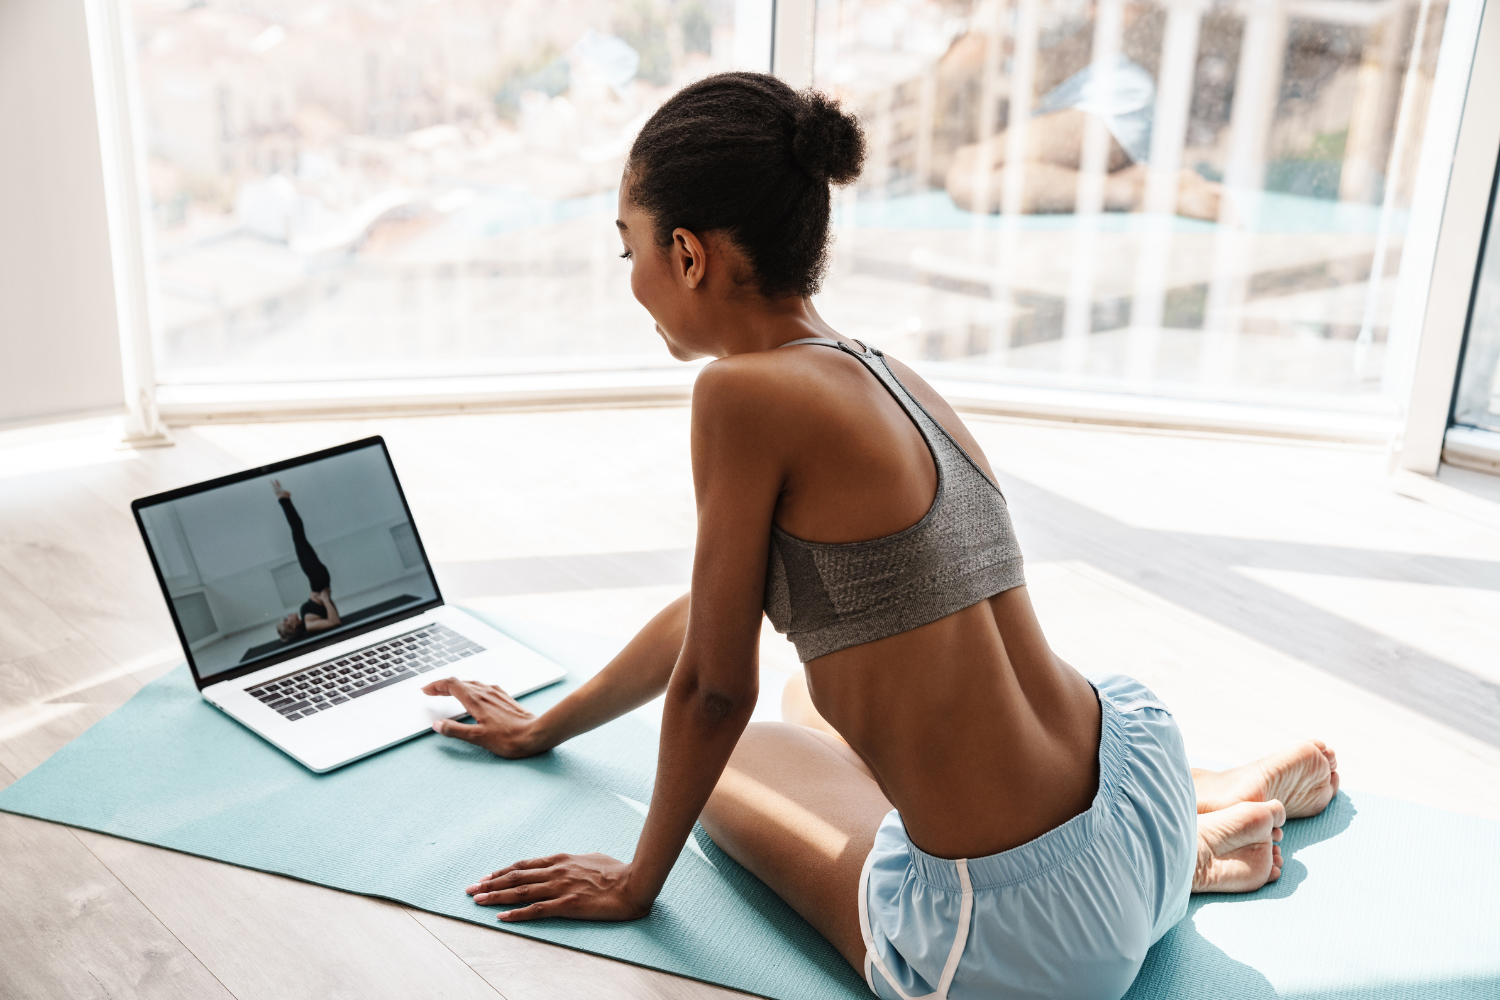 4 Tips for Staying Focused in Online Yoga Teacher Training